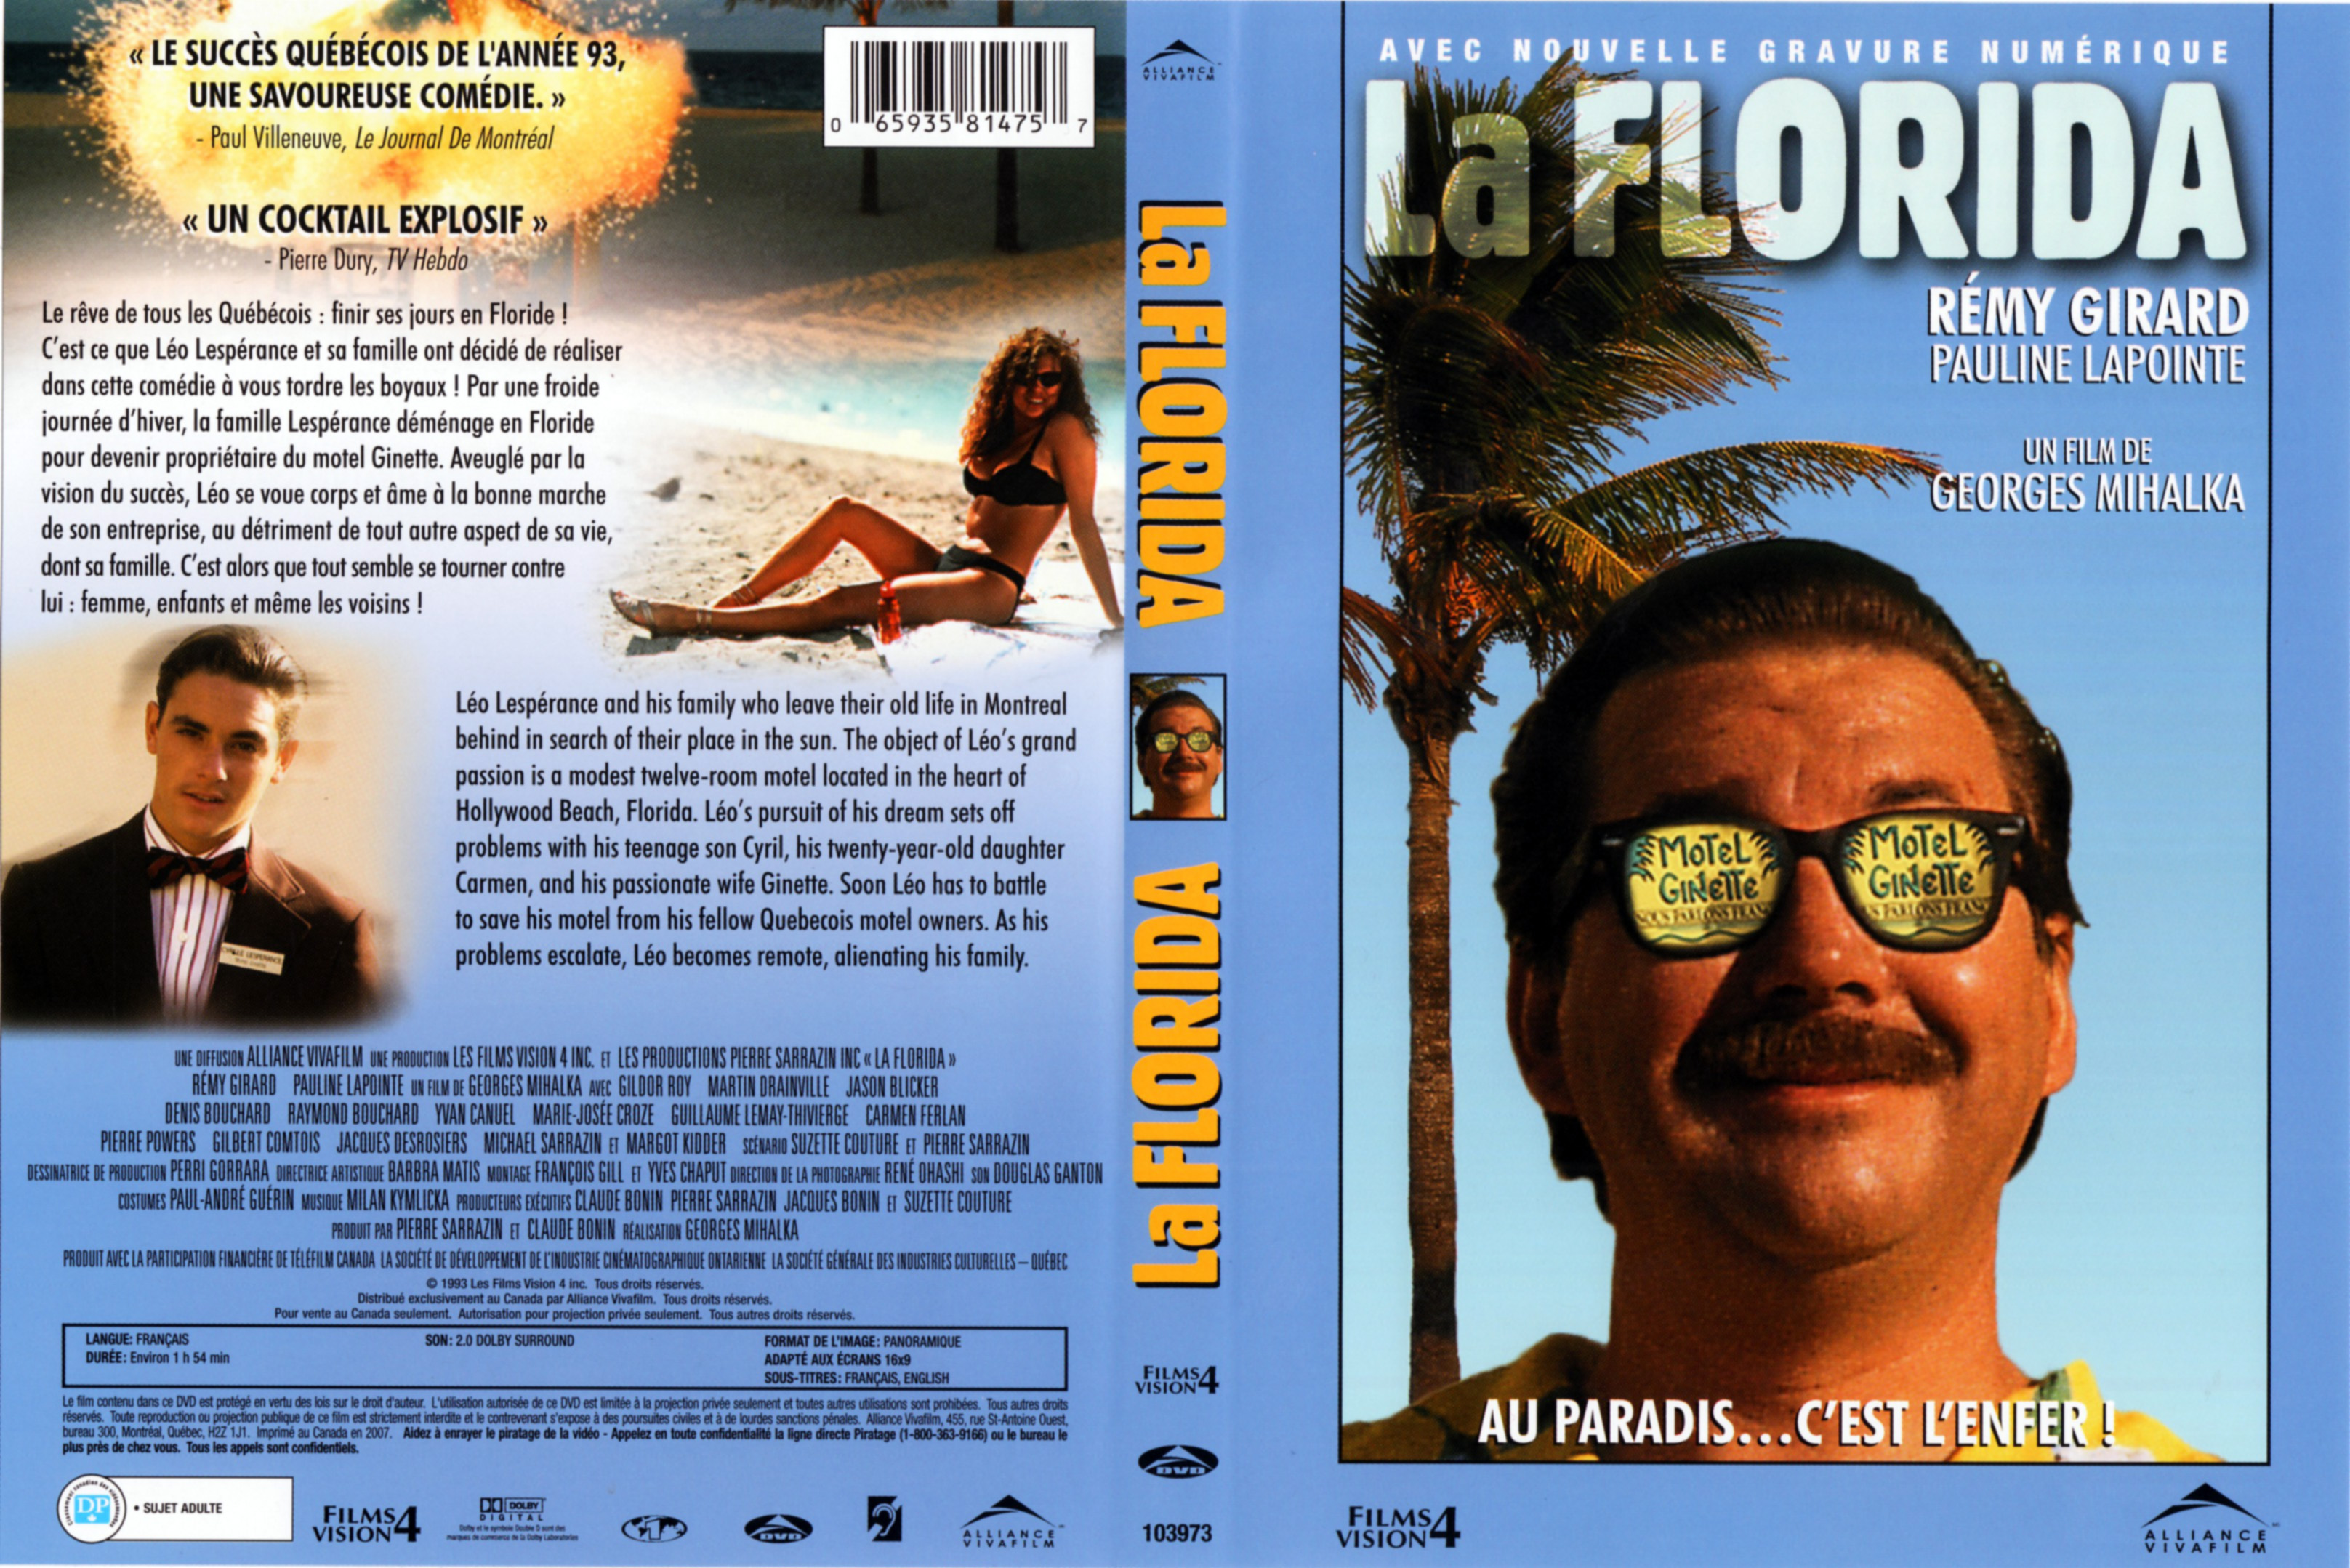 Jaquette DVD La florida